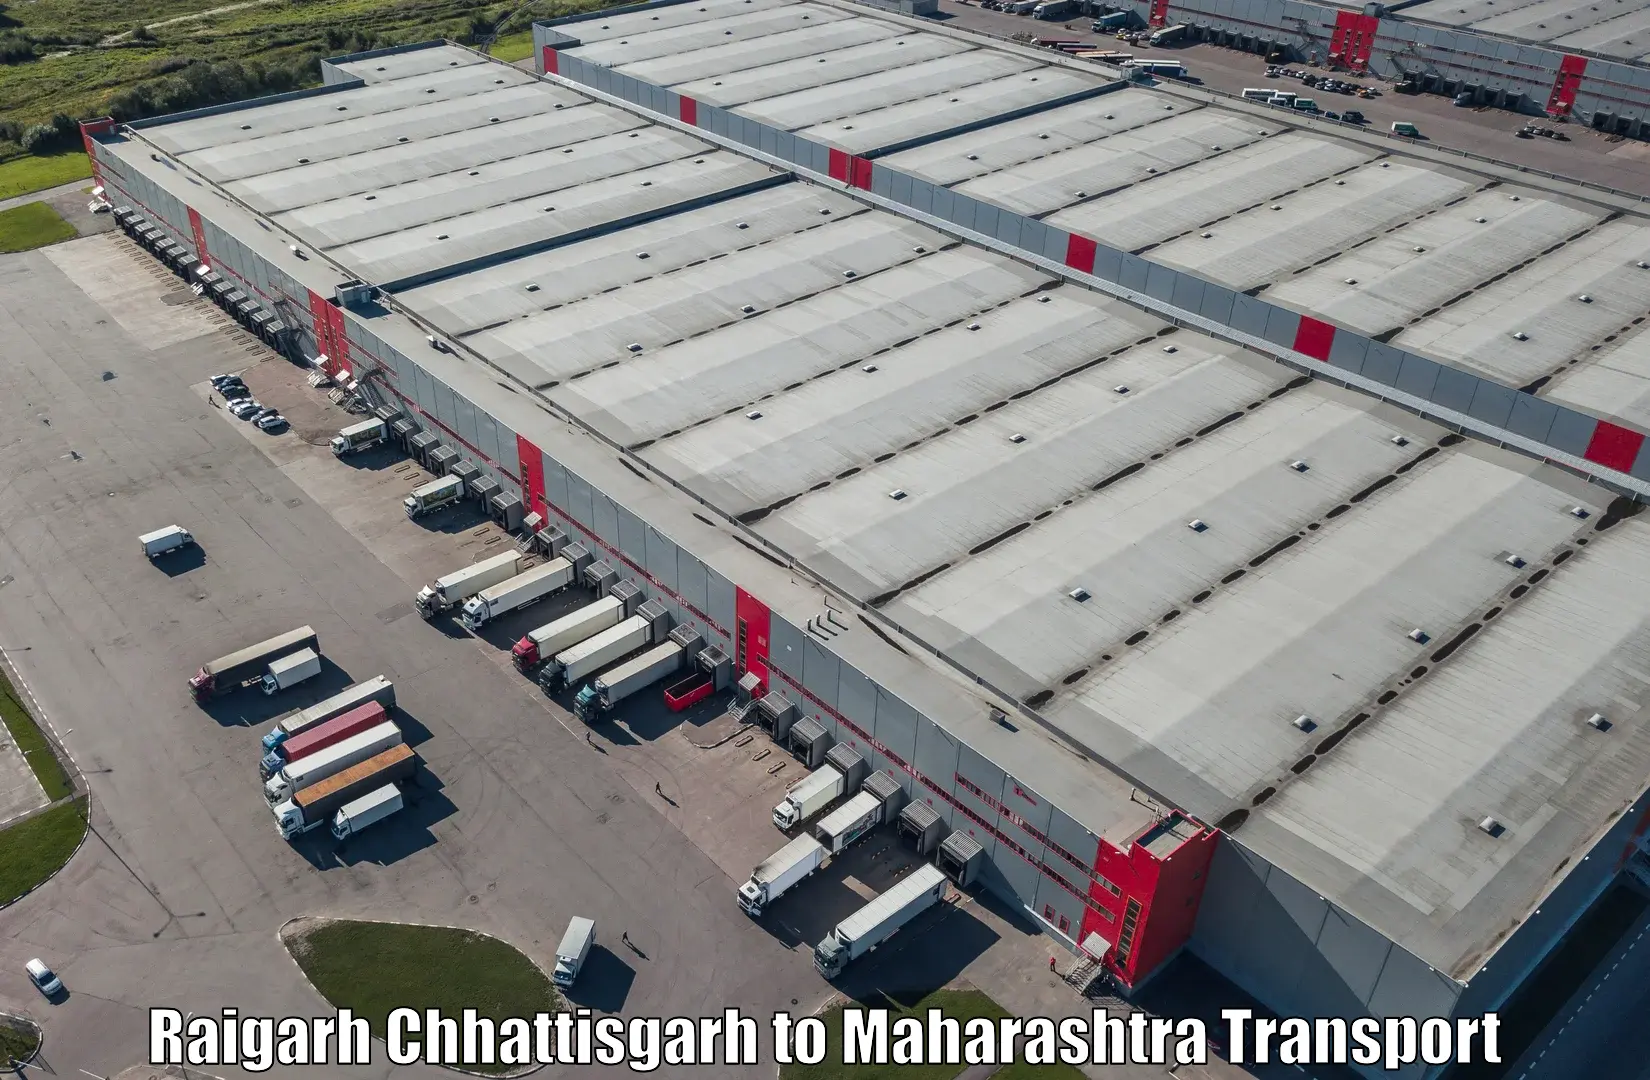 Goods delivery service Raigarh Chhattisgarh to Kannad